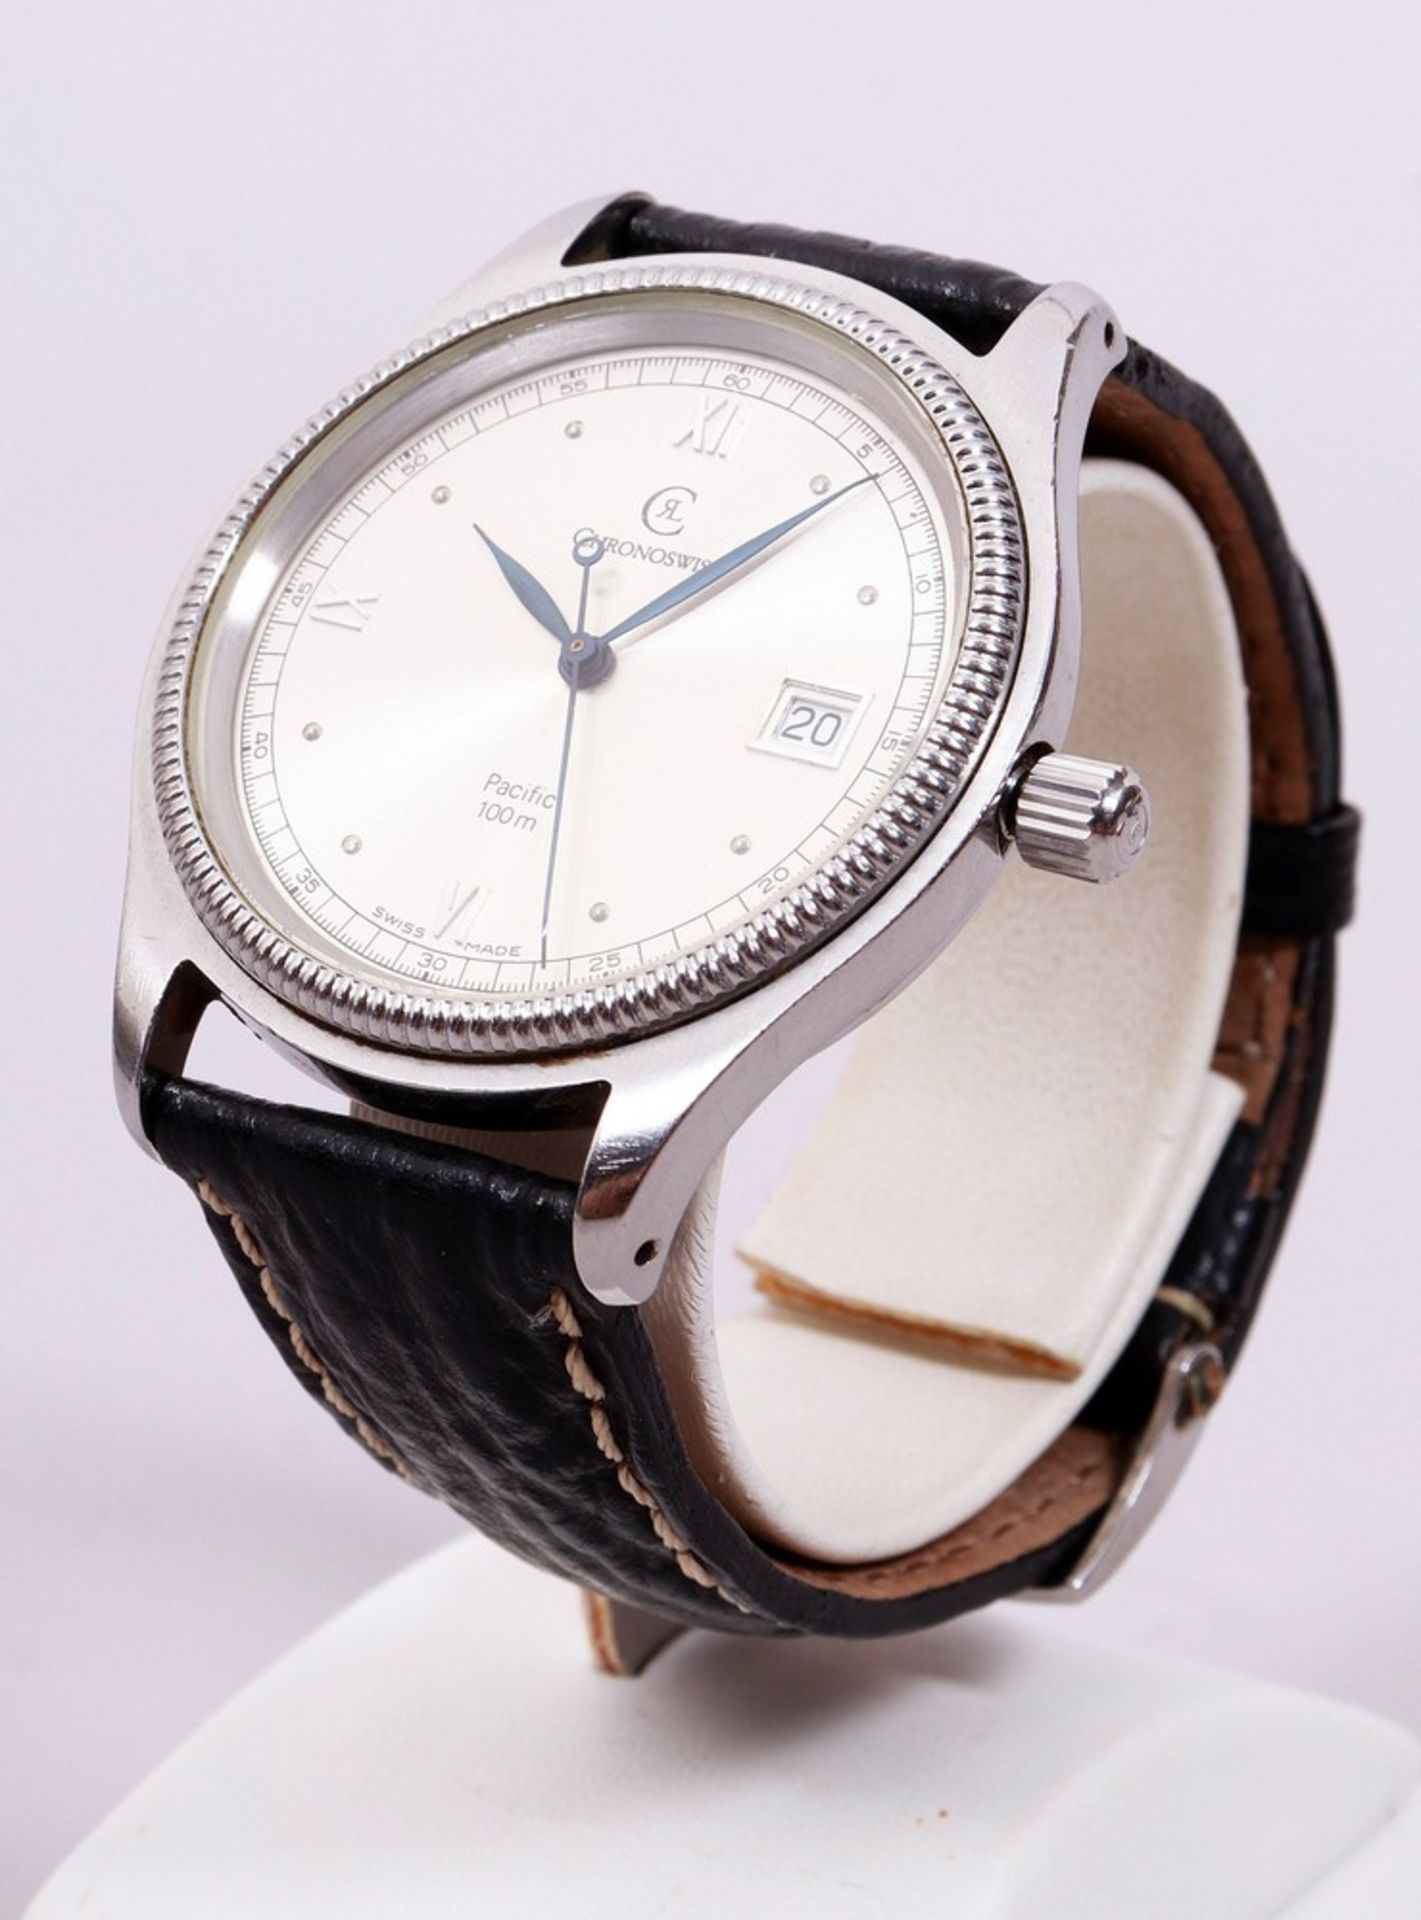 Men's wristwatch, Chronoswiss, model "Pacific 100m", 1990s - Image 3 of 13